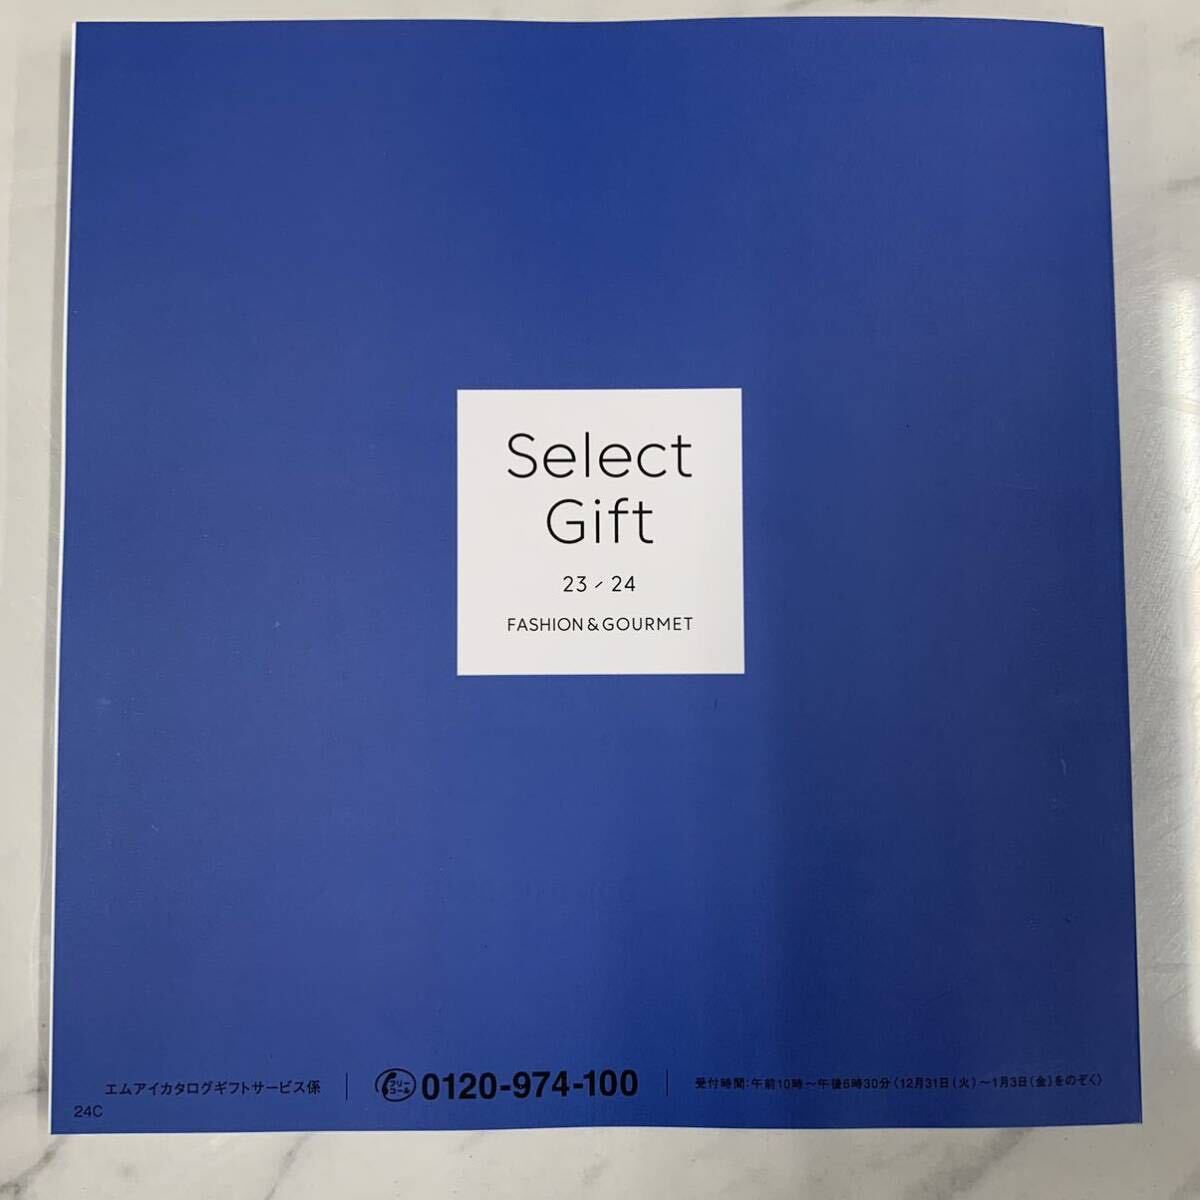 【TK0426②】MITSUKOSHI ISETAN select Gift 23/24 FASHION&GOURMET 三越 伊勢丹 カタログギフト ラピスラズリコース 定価22,990円 未使用_画像3